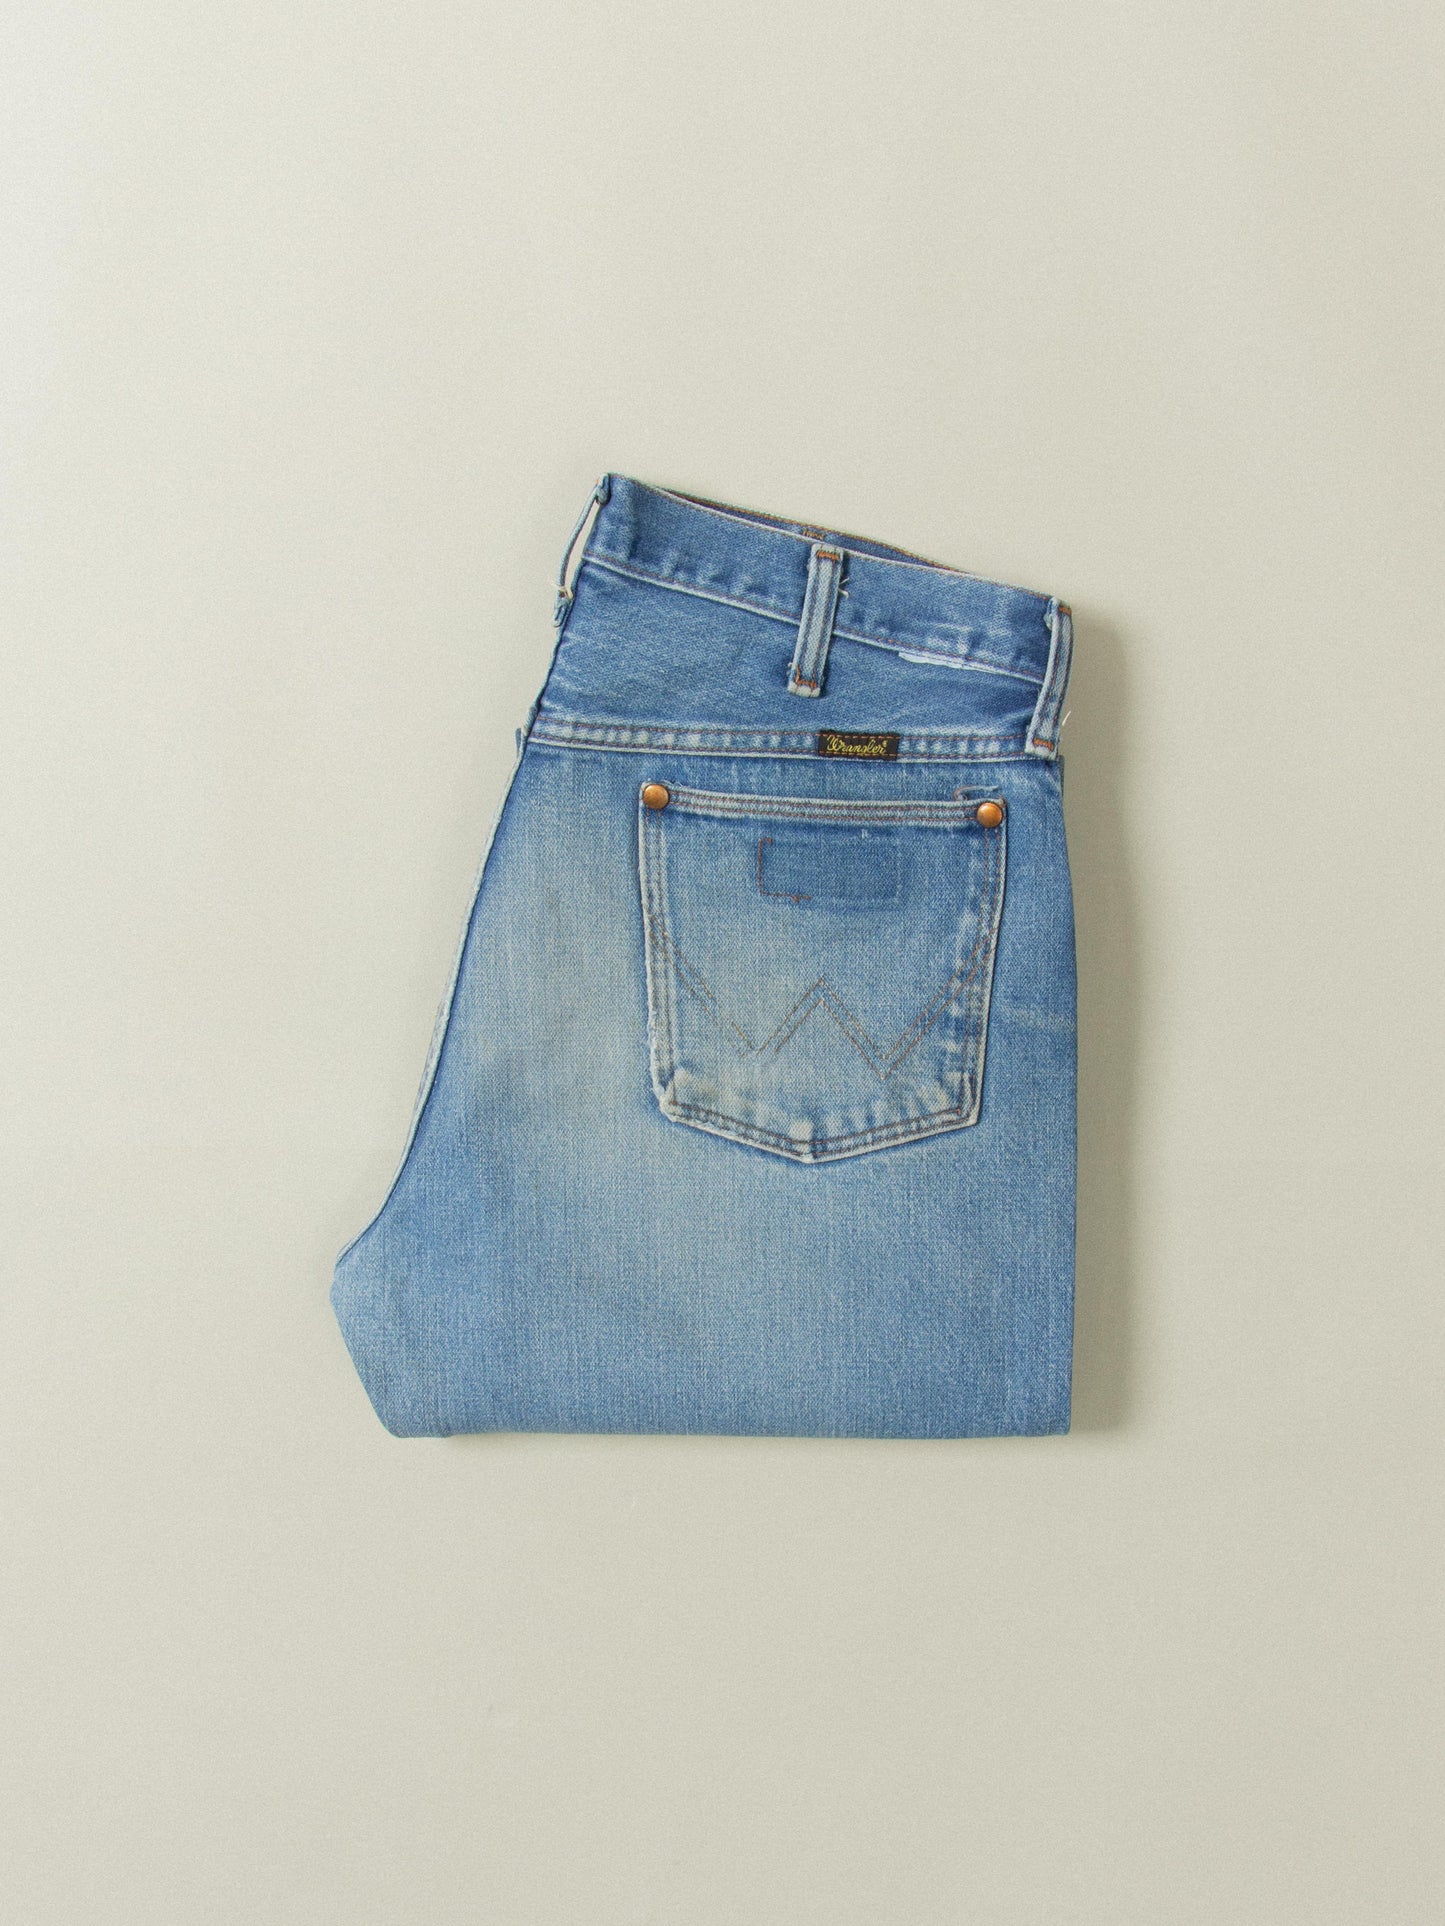 Vtg Wrangler Straight Cut Jeans - Made in USA (33x31)